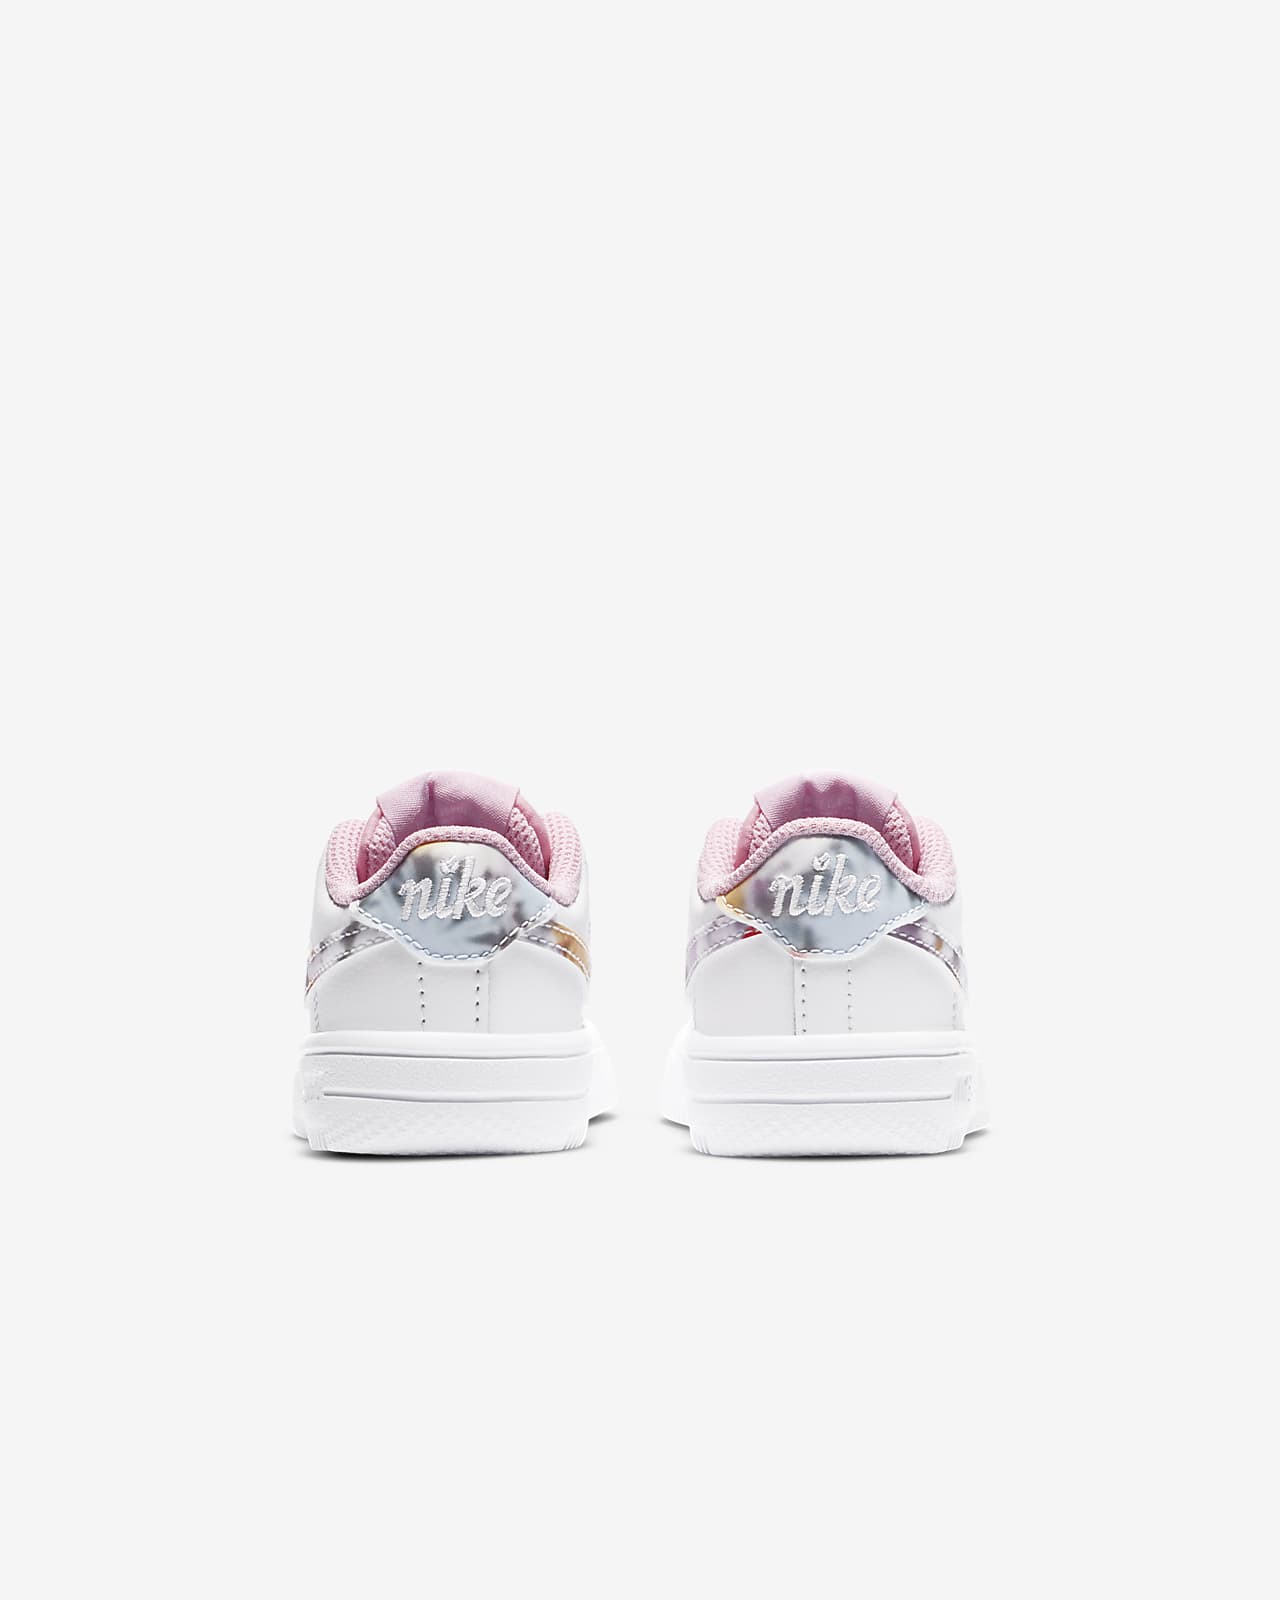 18 SE Baby and Toddler Shoe. Nike SG